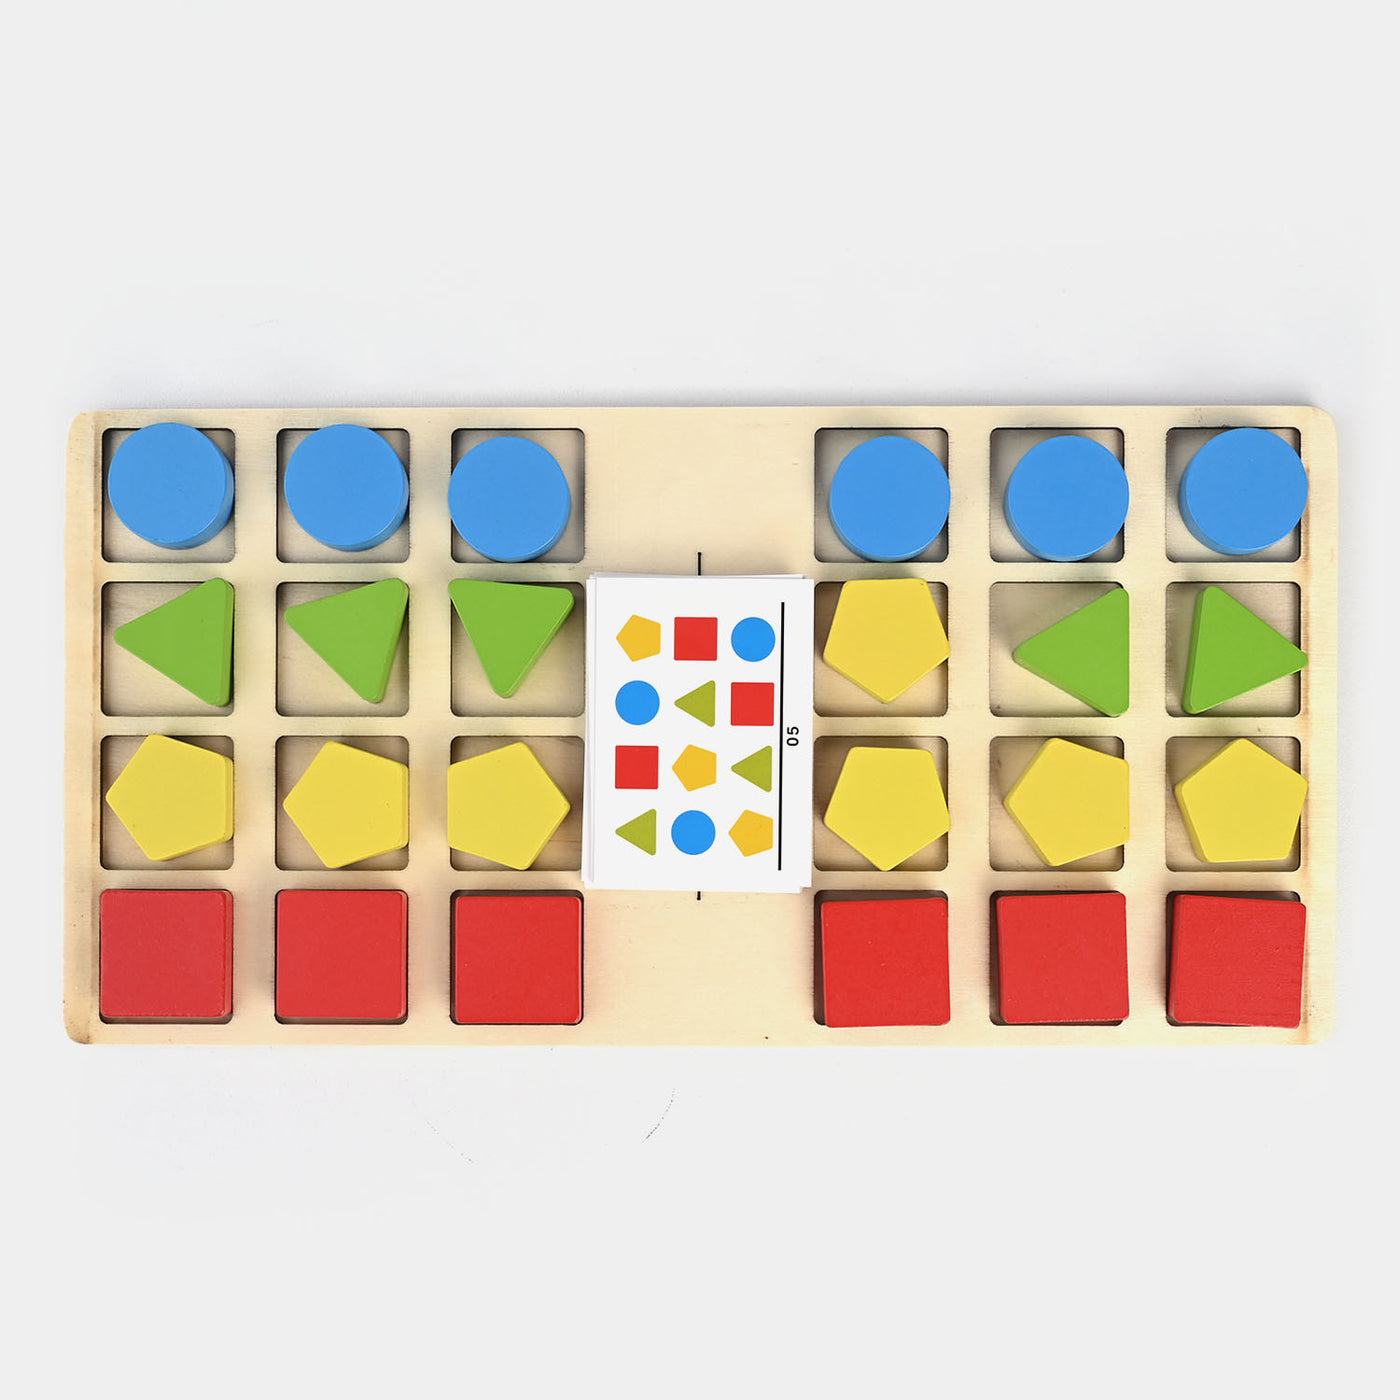 Shape Four Color Battle Game For Kids